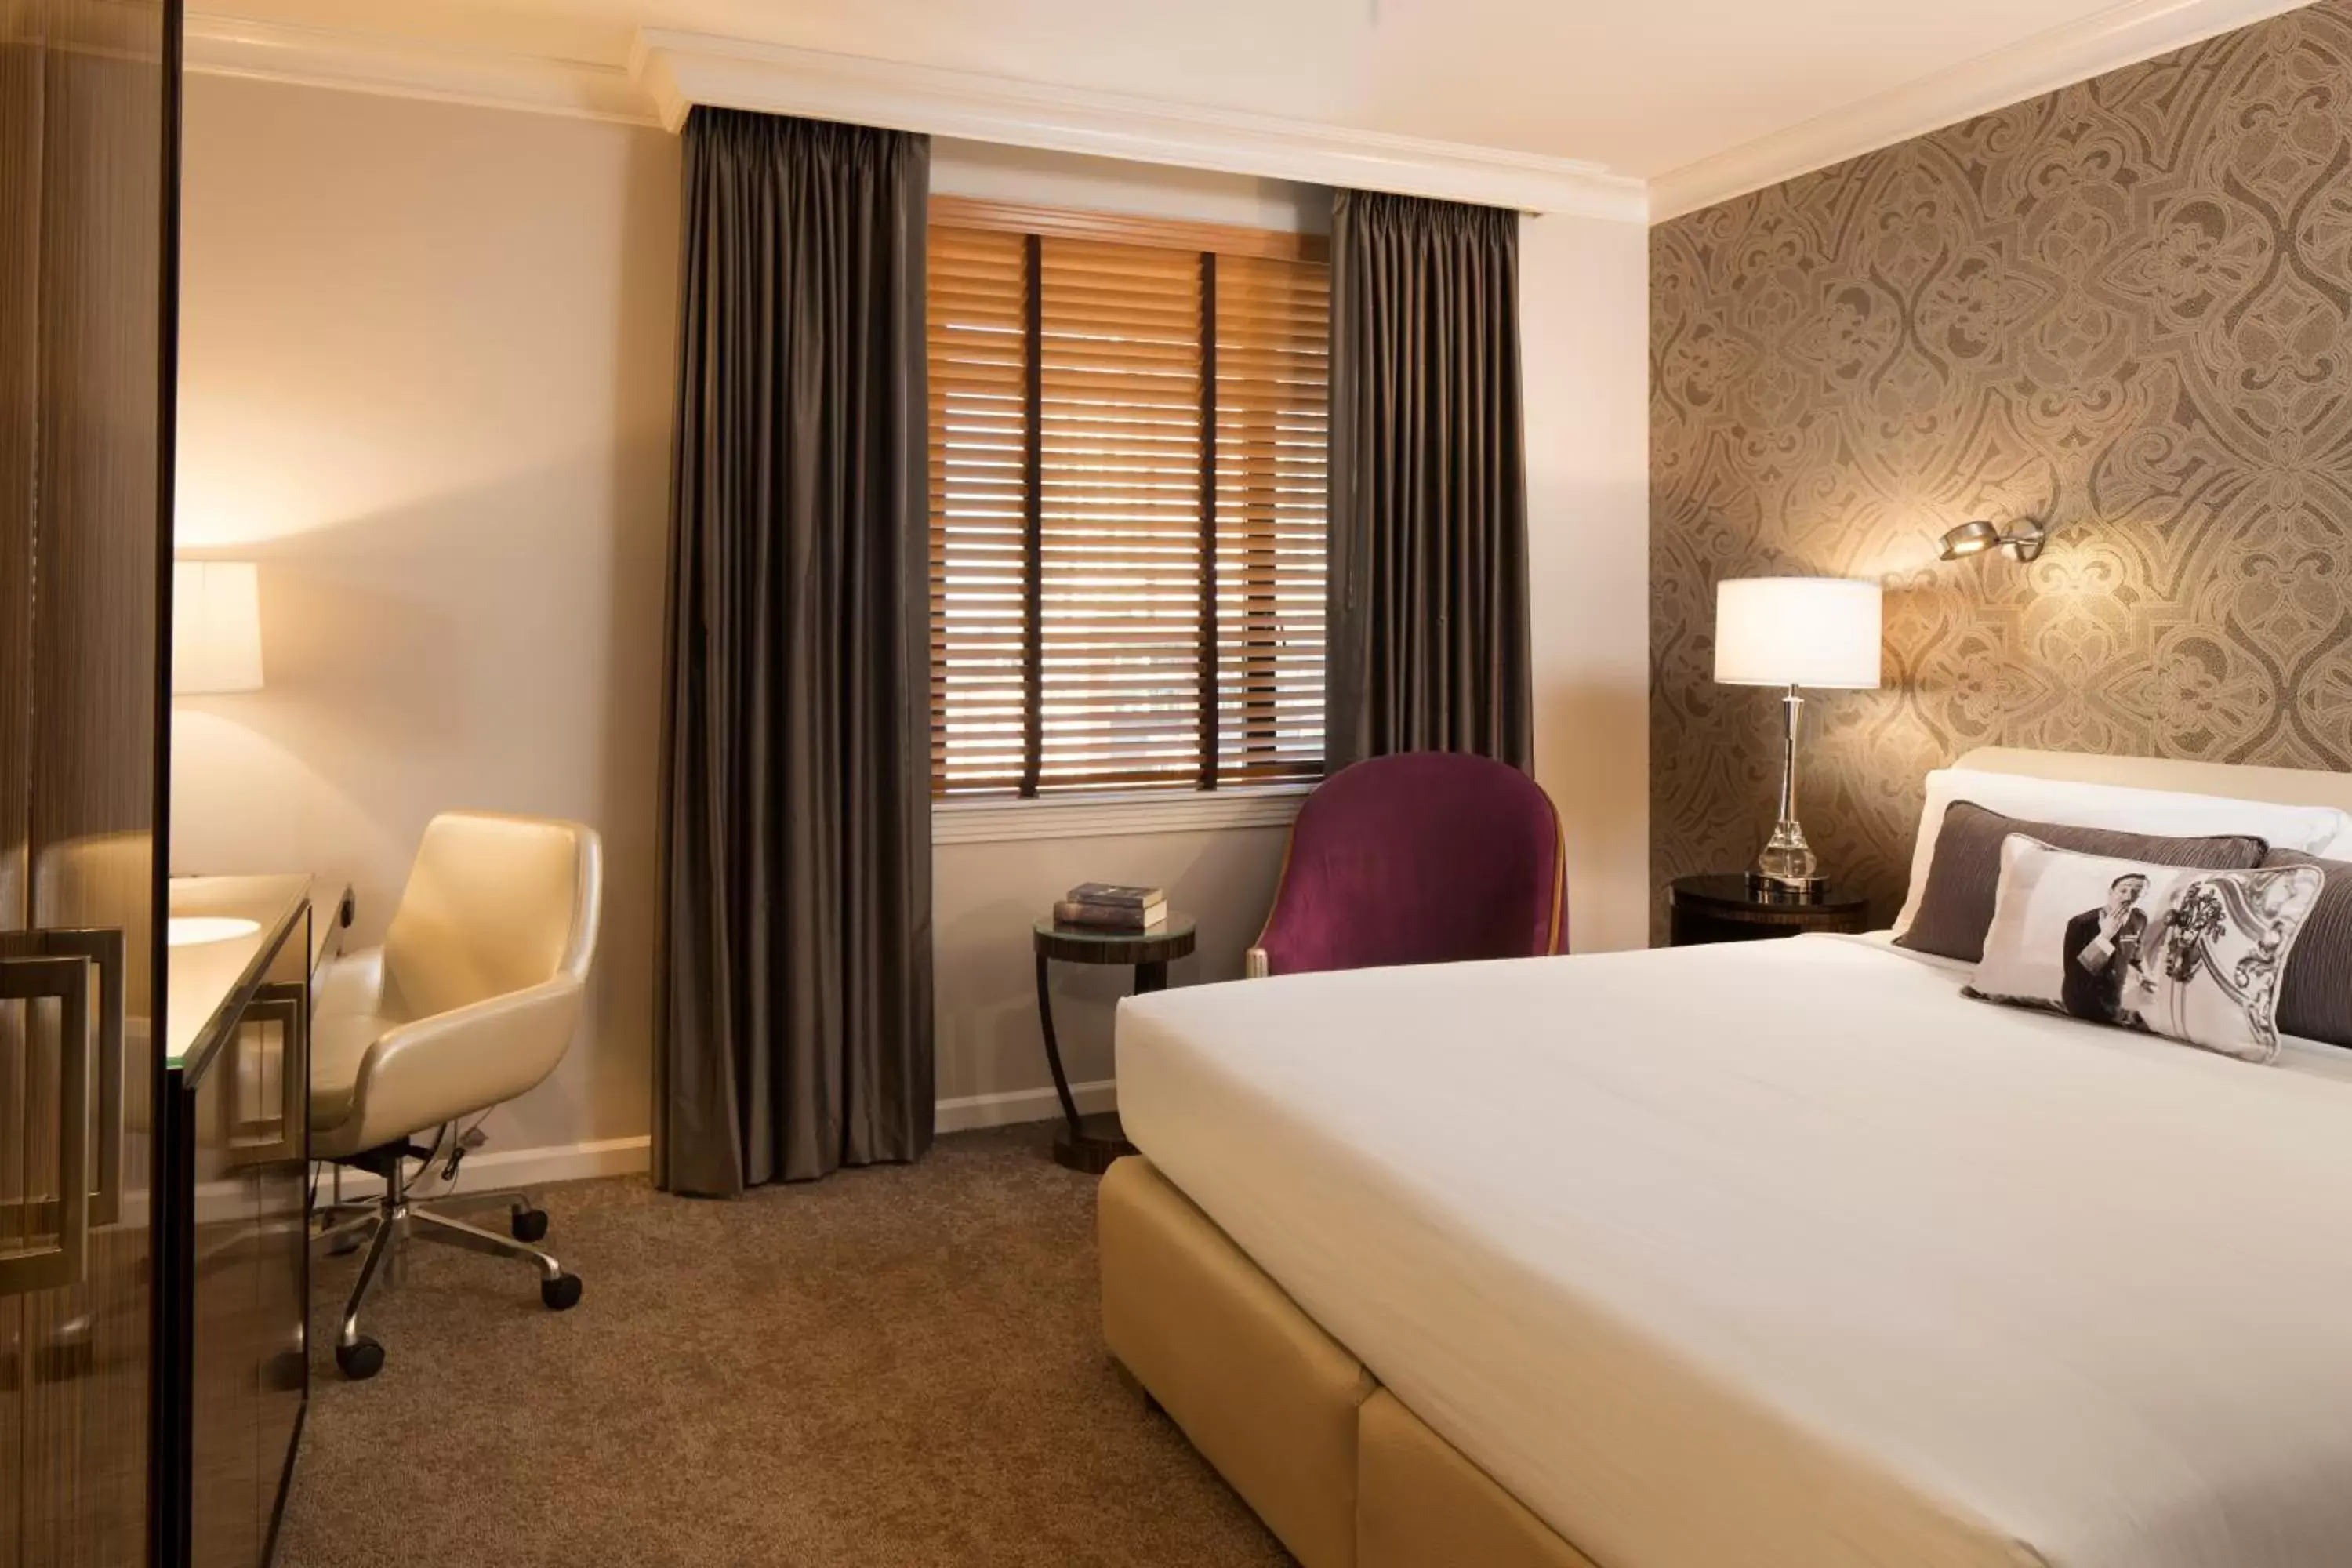 Premium King Room in Hotel De Anza, a Destination by Hyatt Hotel